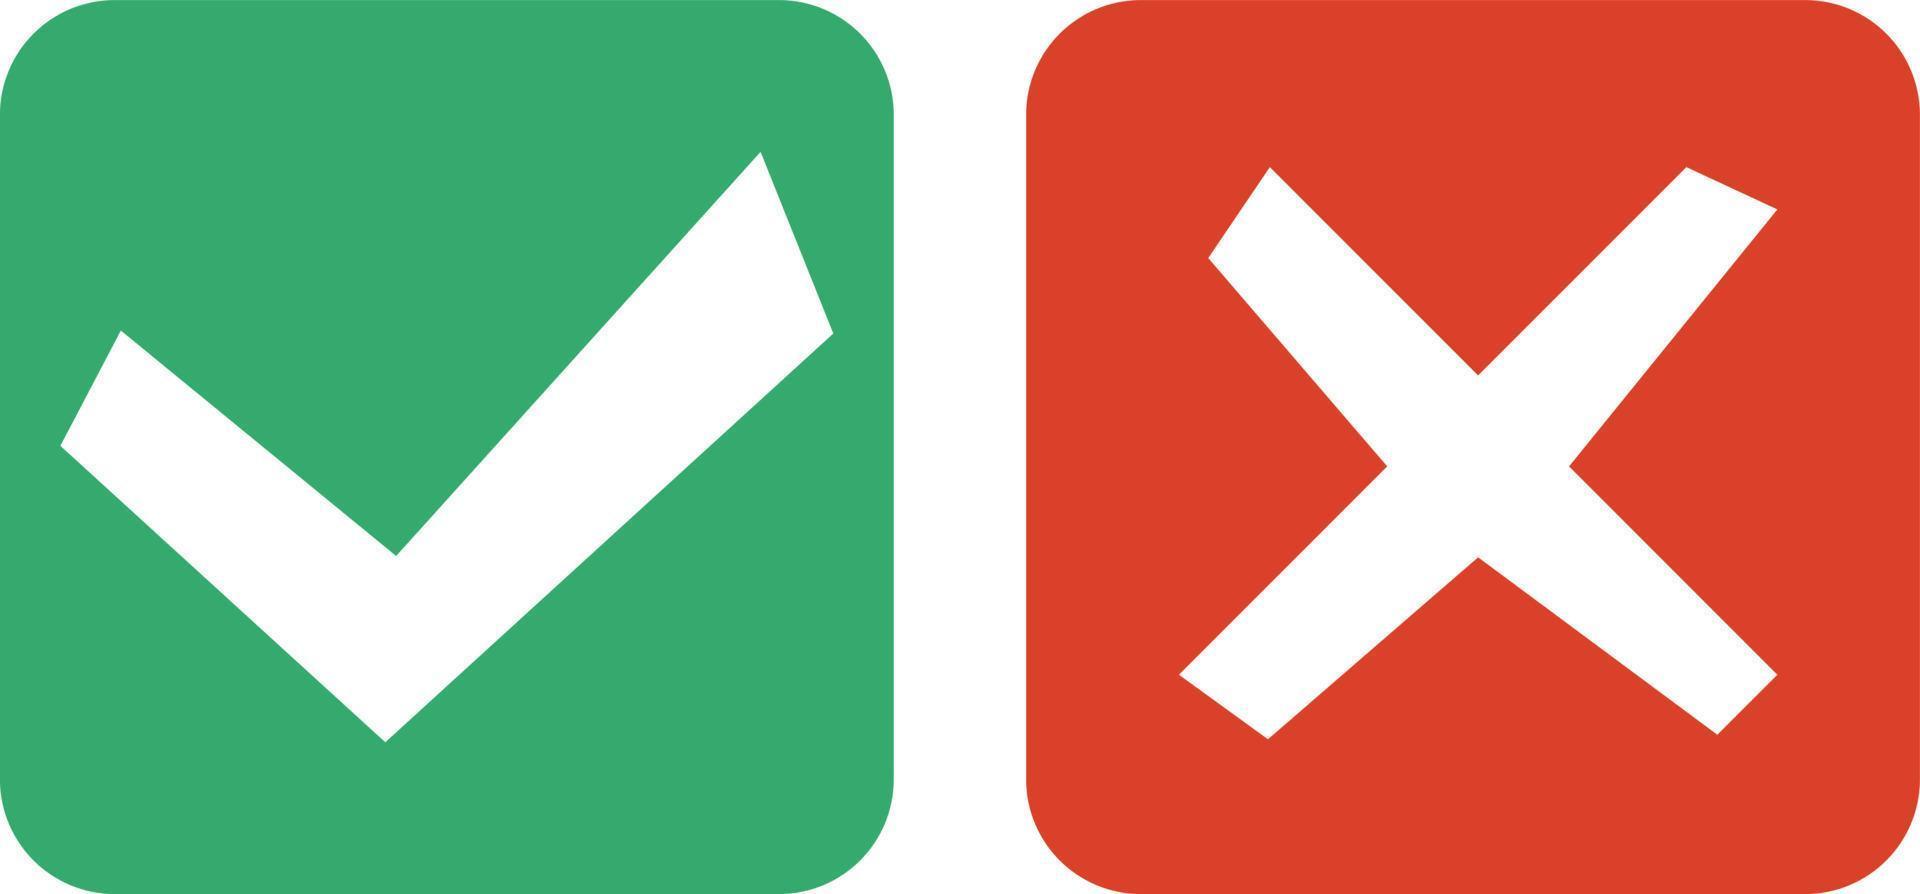 groen vinkje pictogram en rode kruis teken pictogramserie. vector